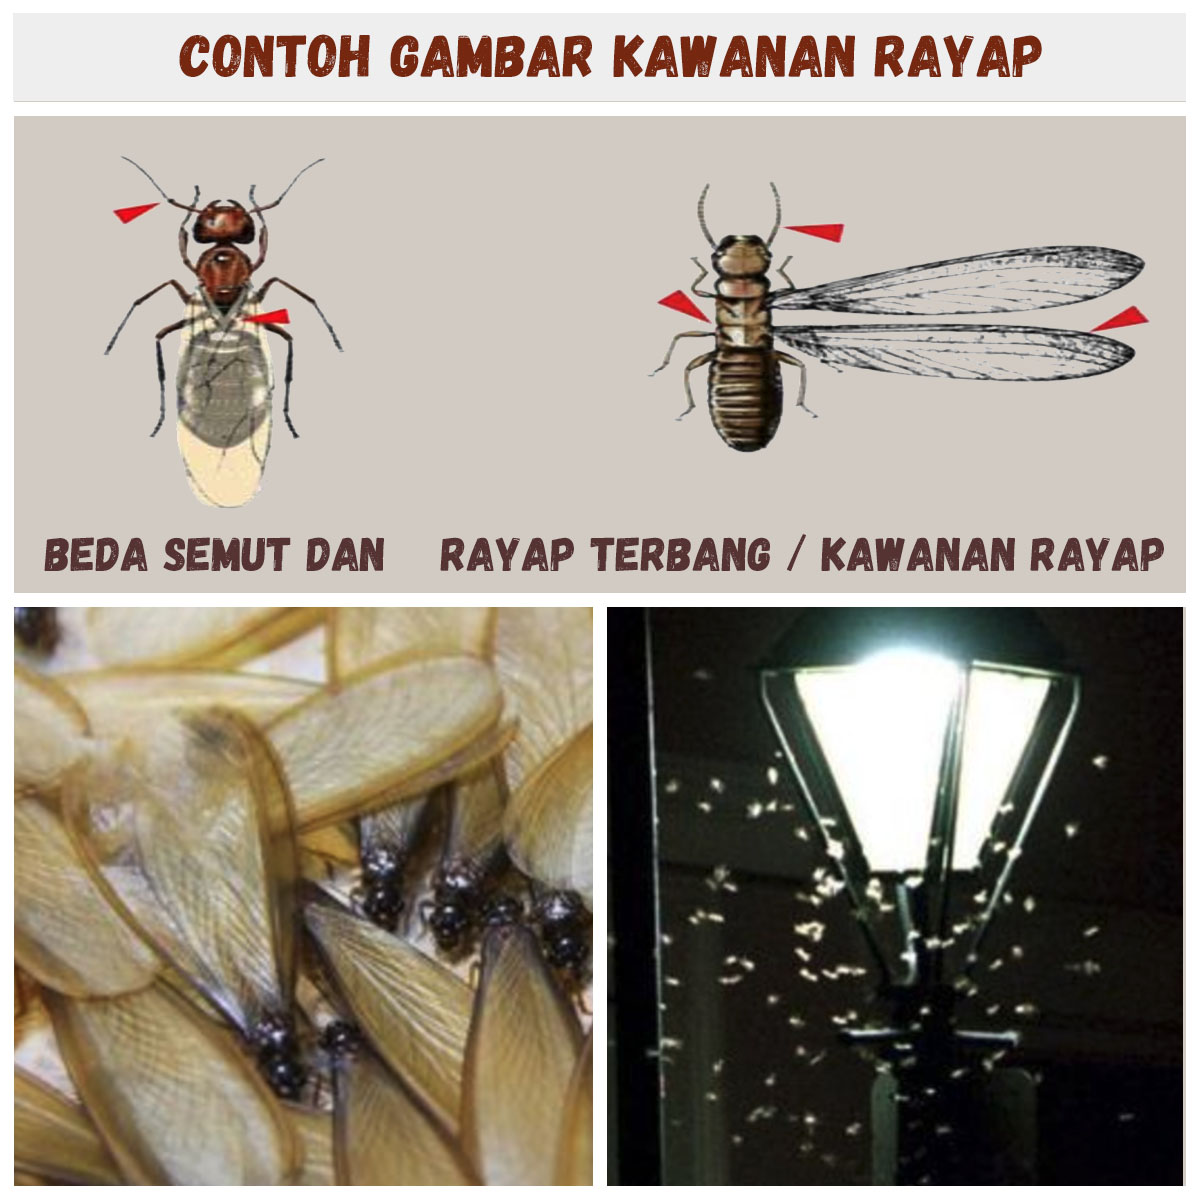 informasi foto dan gambar kawanan rayap terbang, beda antara semut dan rayap